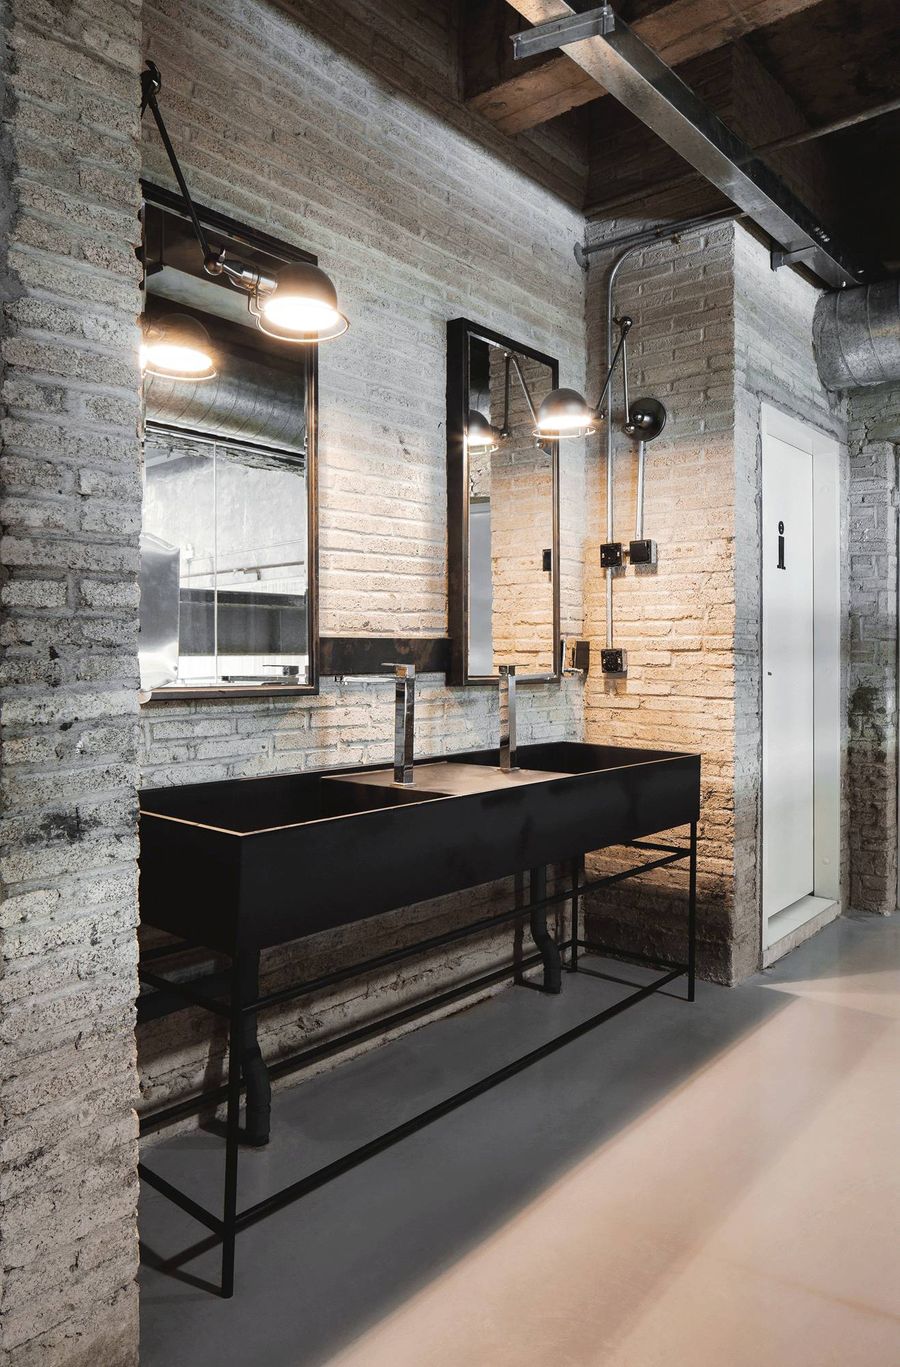 Black Metal Double Vanity in Industrial Bathroom with White Brick walls via Jingze LI of NARRATION